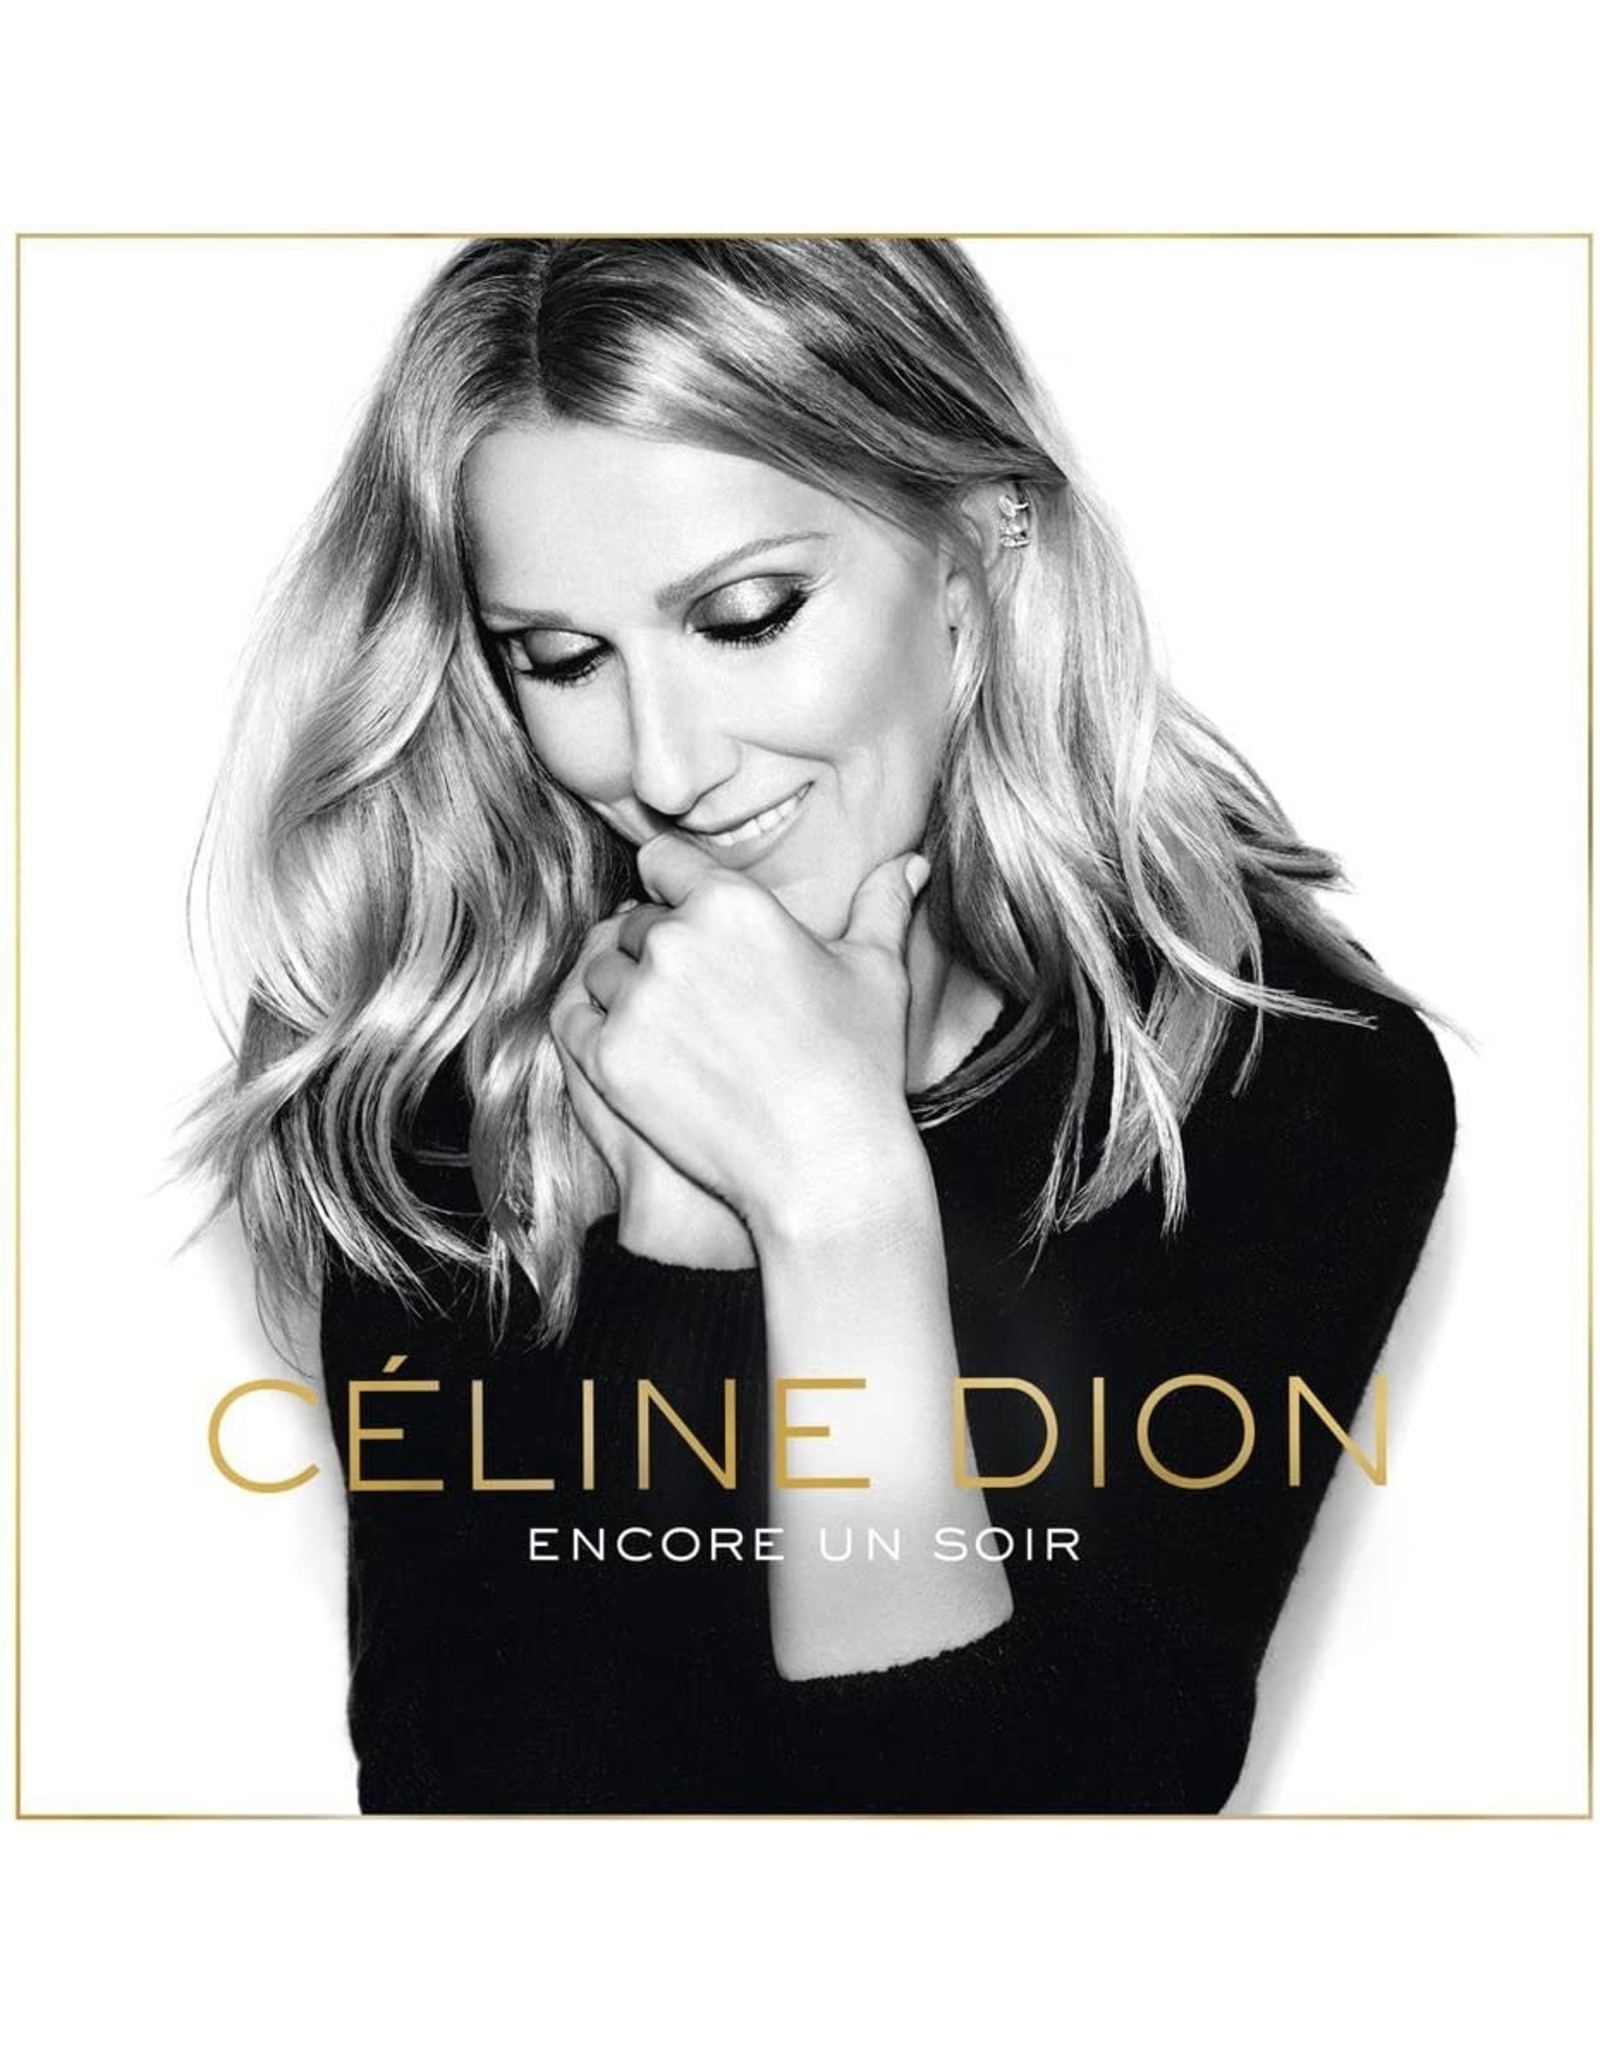 Celine Dion - Encore Un Soir (One More Night)